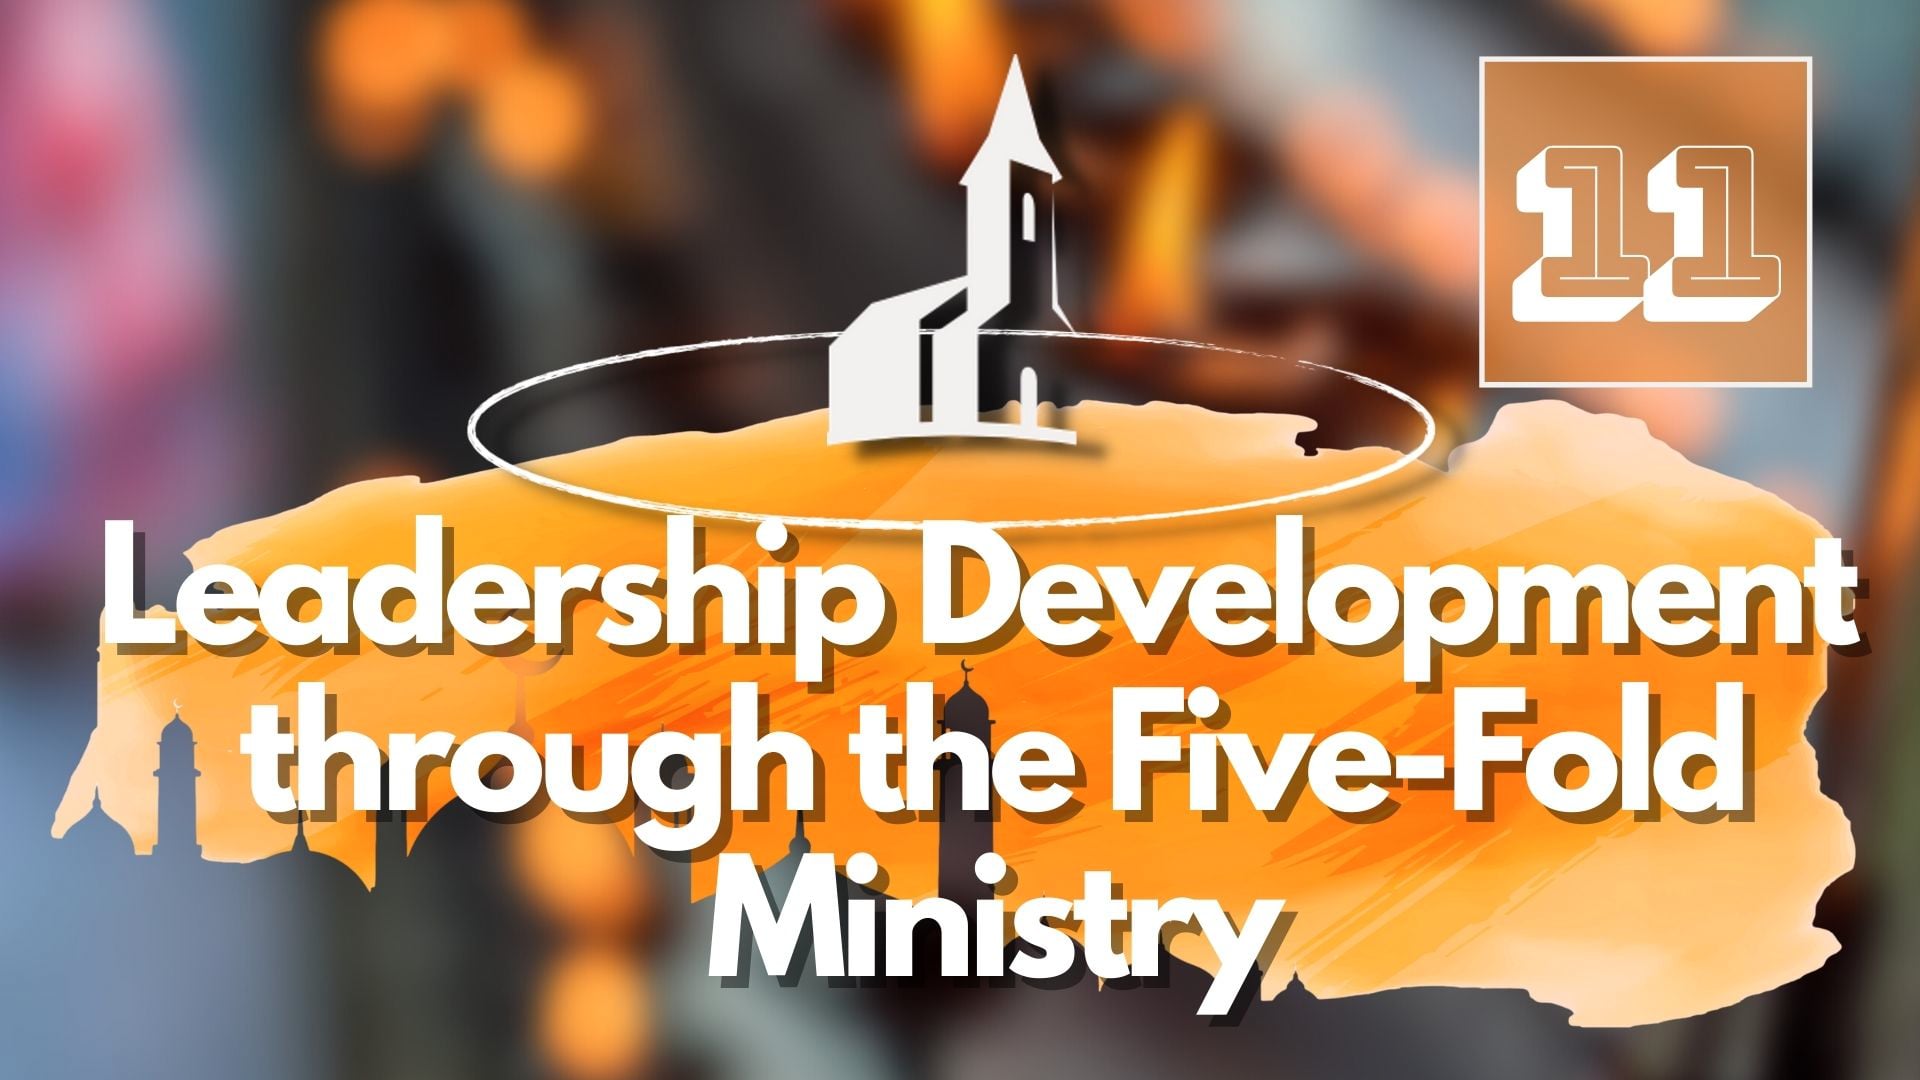 11. Leadership Development through the Five-Fold Ministry – Mike Shipman